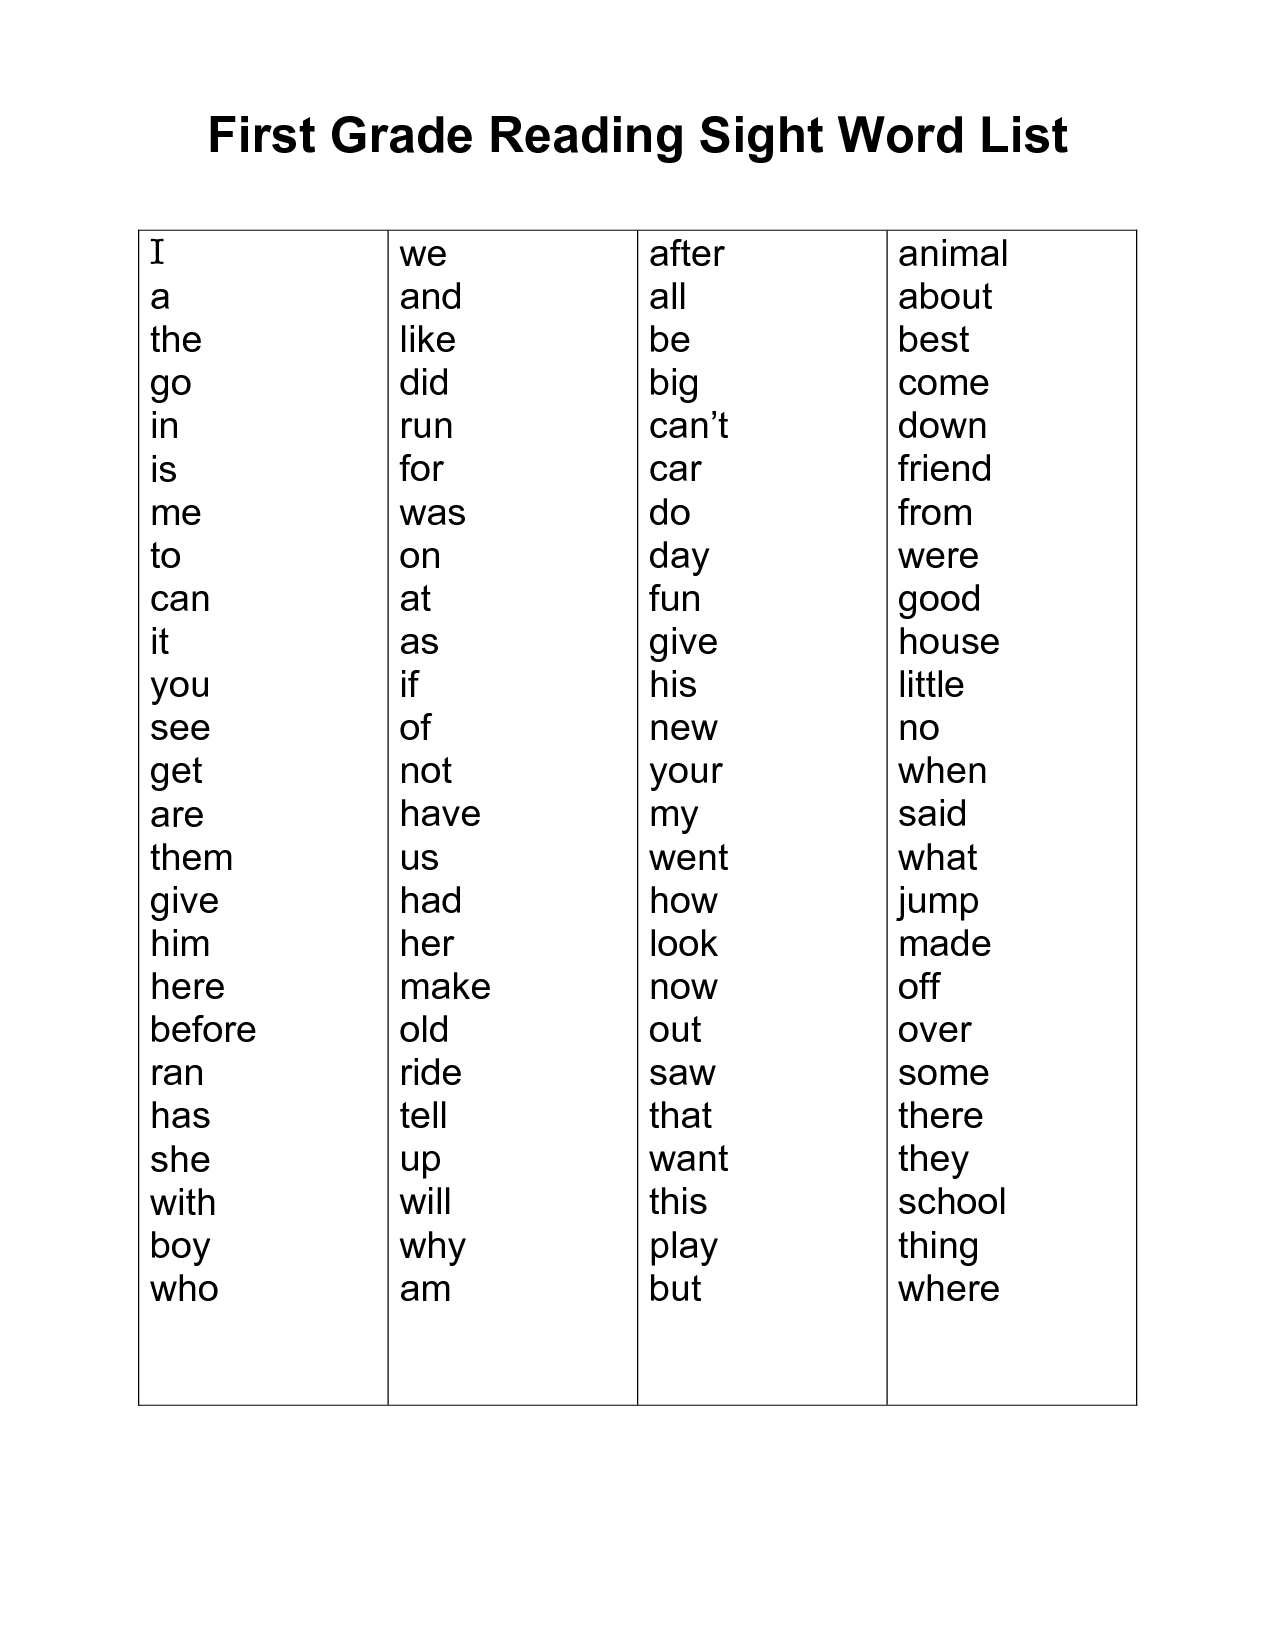 First Grade Sight Word List Image